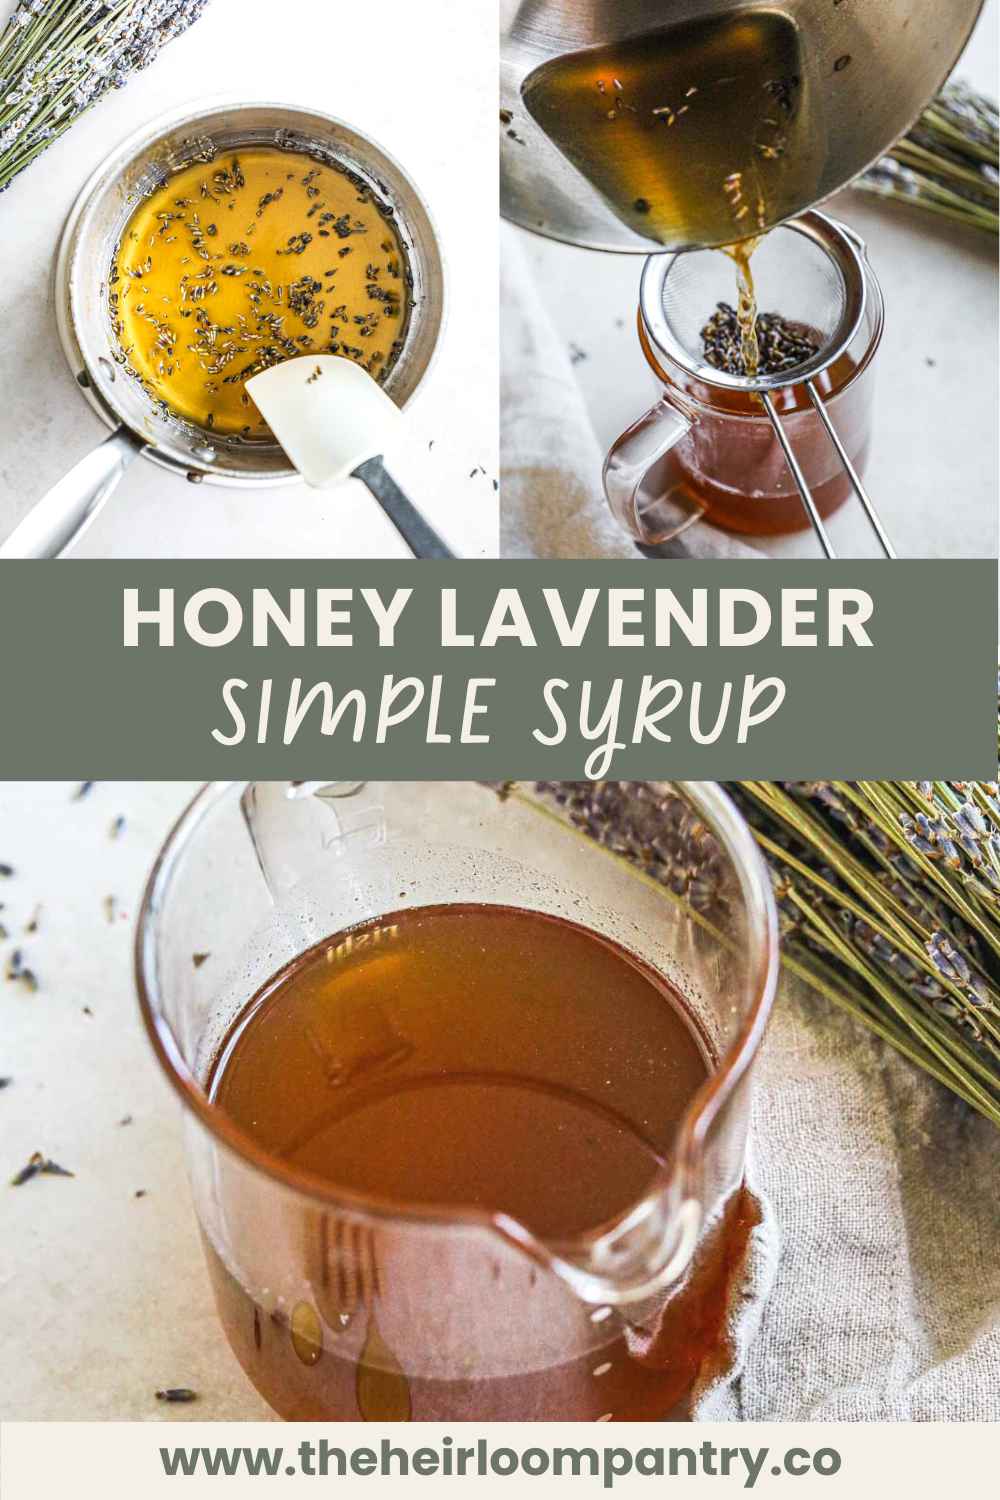 Honey lavender simple syrup Pinterest pin.